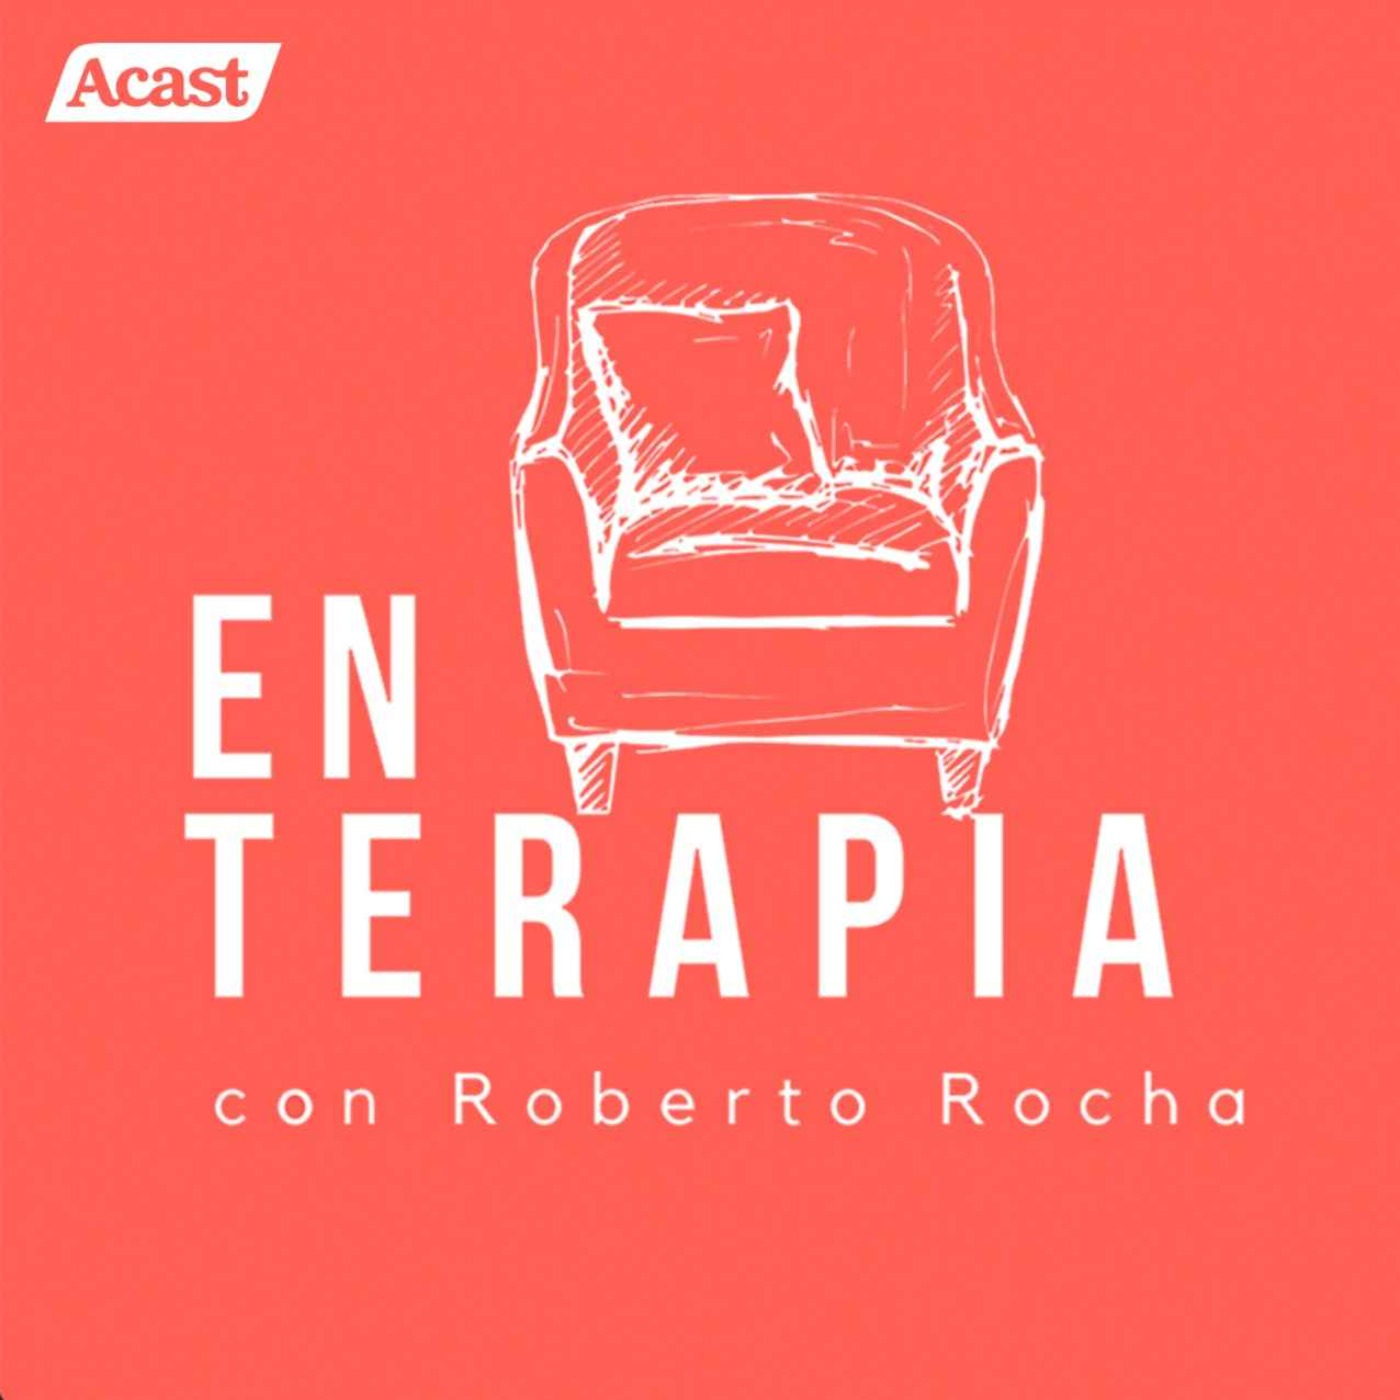 En terapia con Roberto Rocha:Roberto Rocha